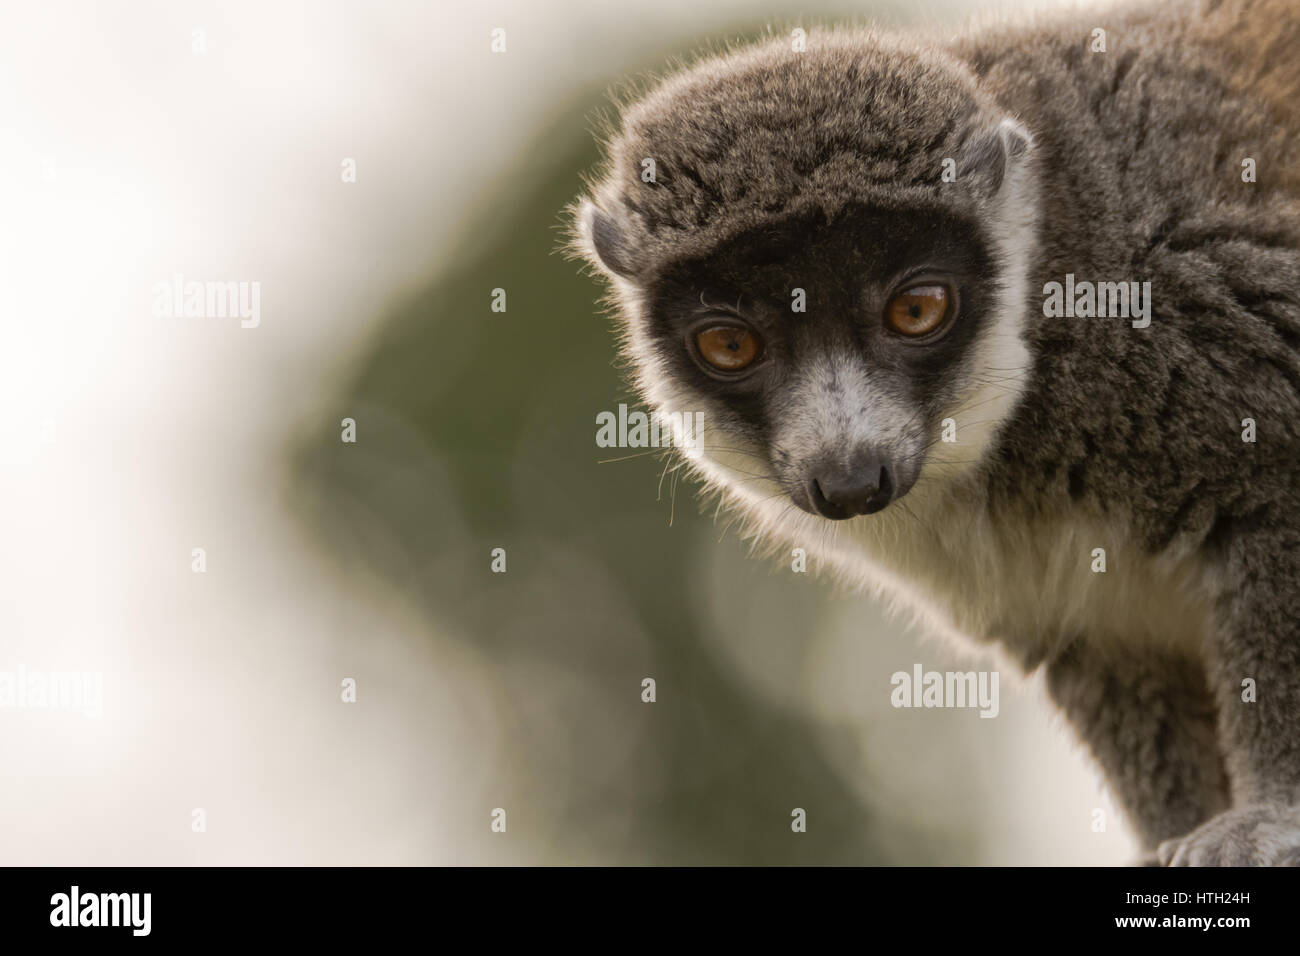 Mongoose lemur (Eulemur mongoz) head on. Female arboreal primate in the Lemuridae family, native to Madagascar and the Comoros Islands Stock Photo